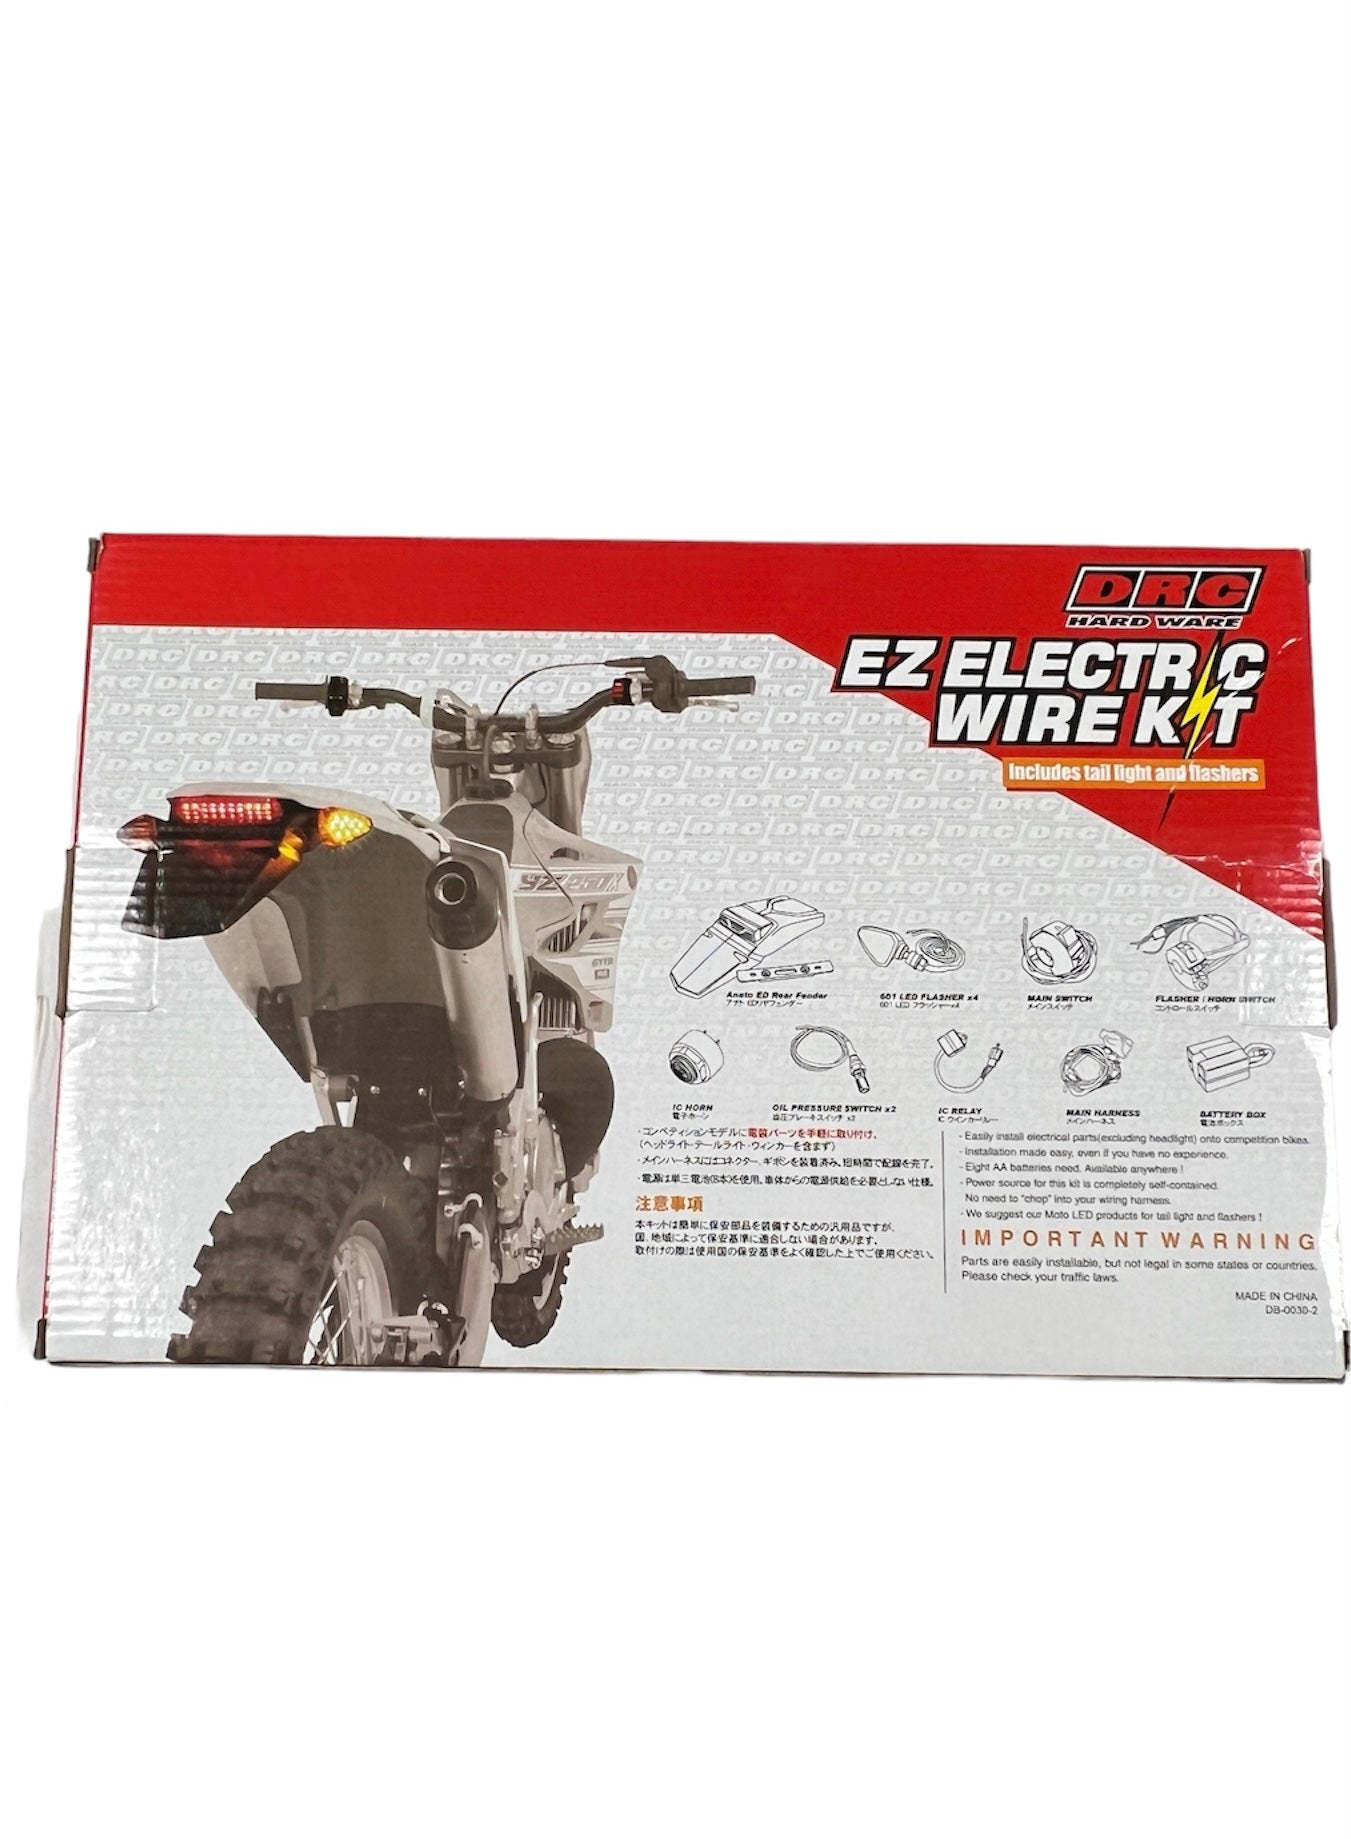 Dirt bike electric wire kit